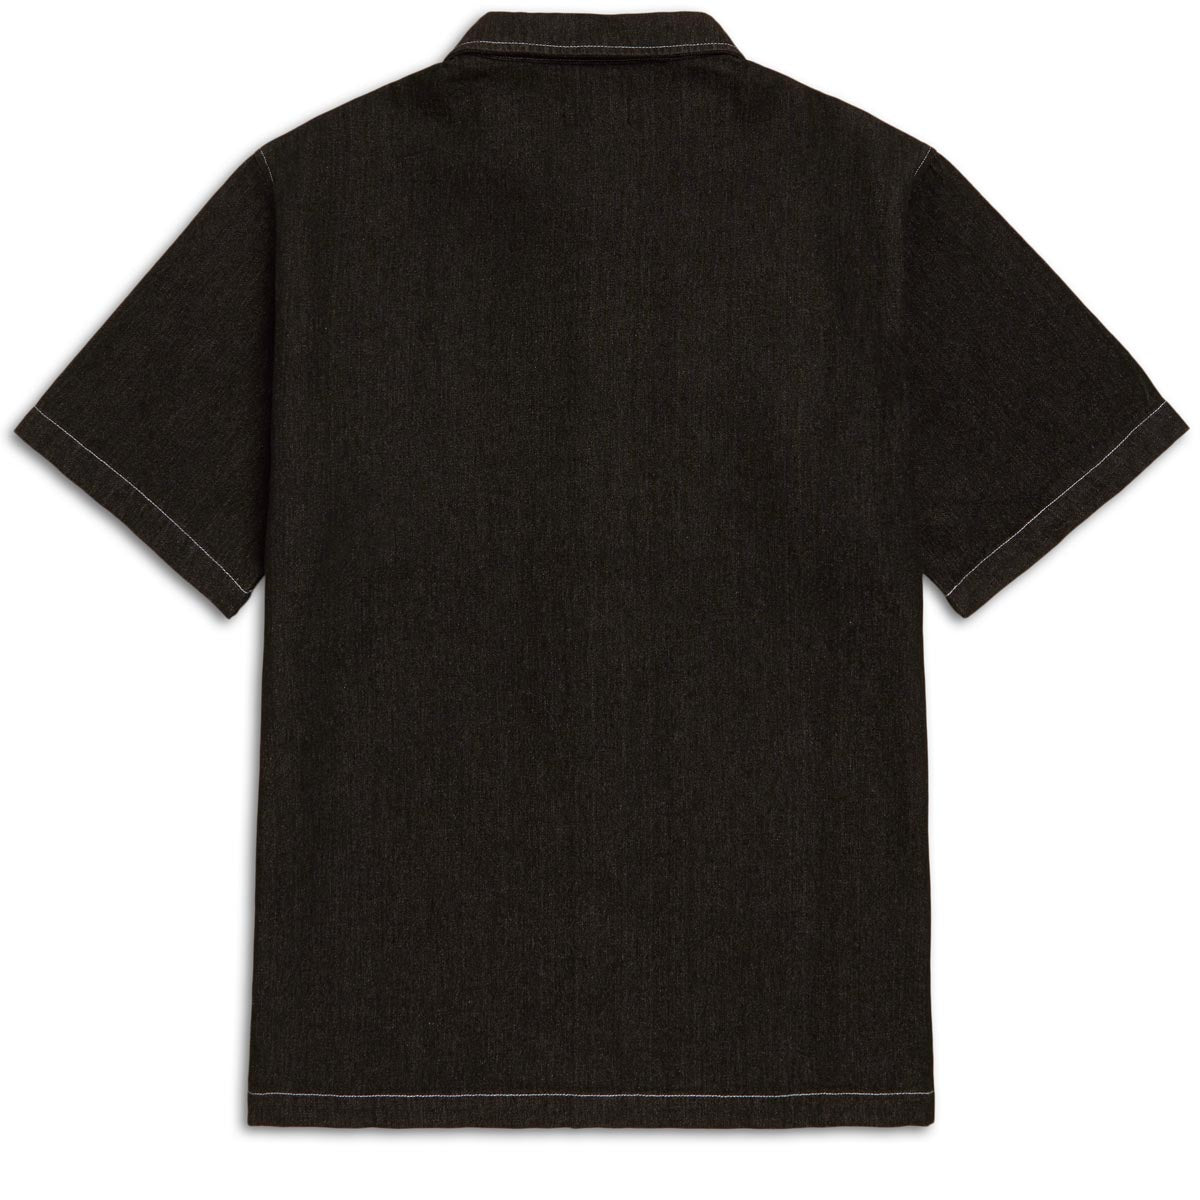 CCS Heavy Denim Work Shirt - Black image 2